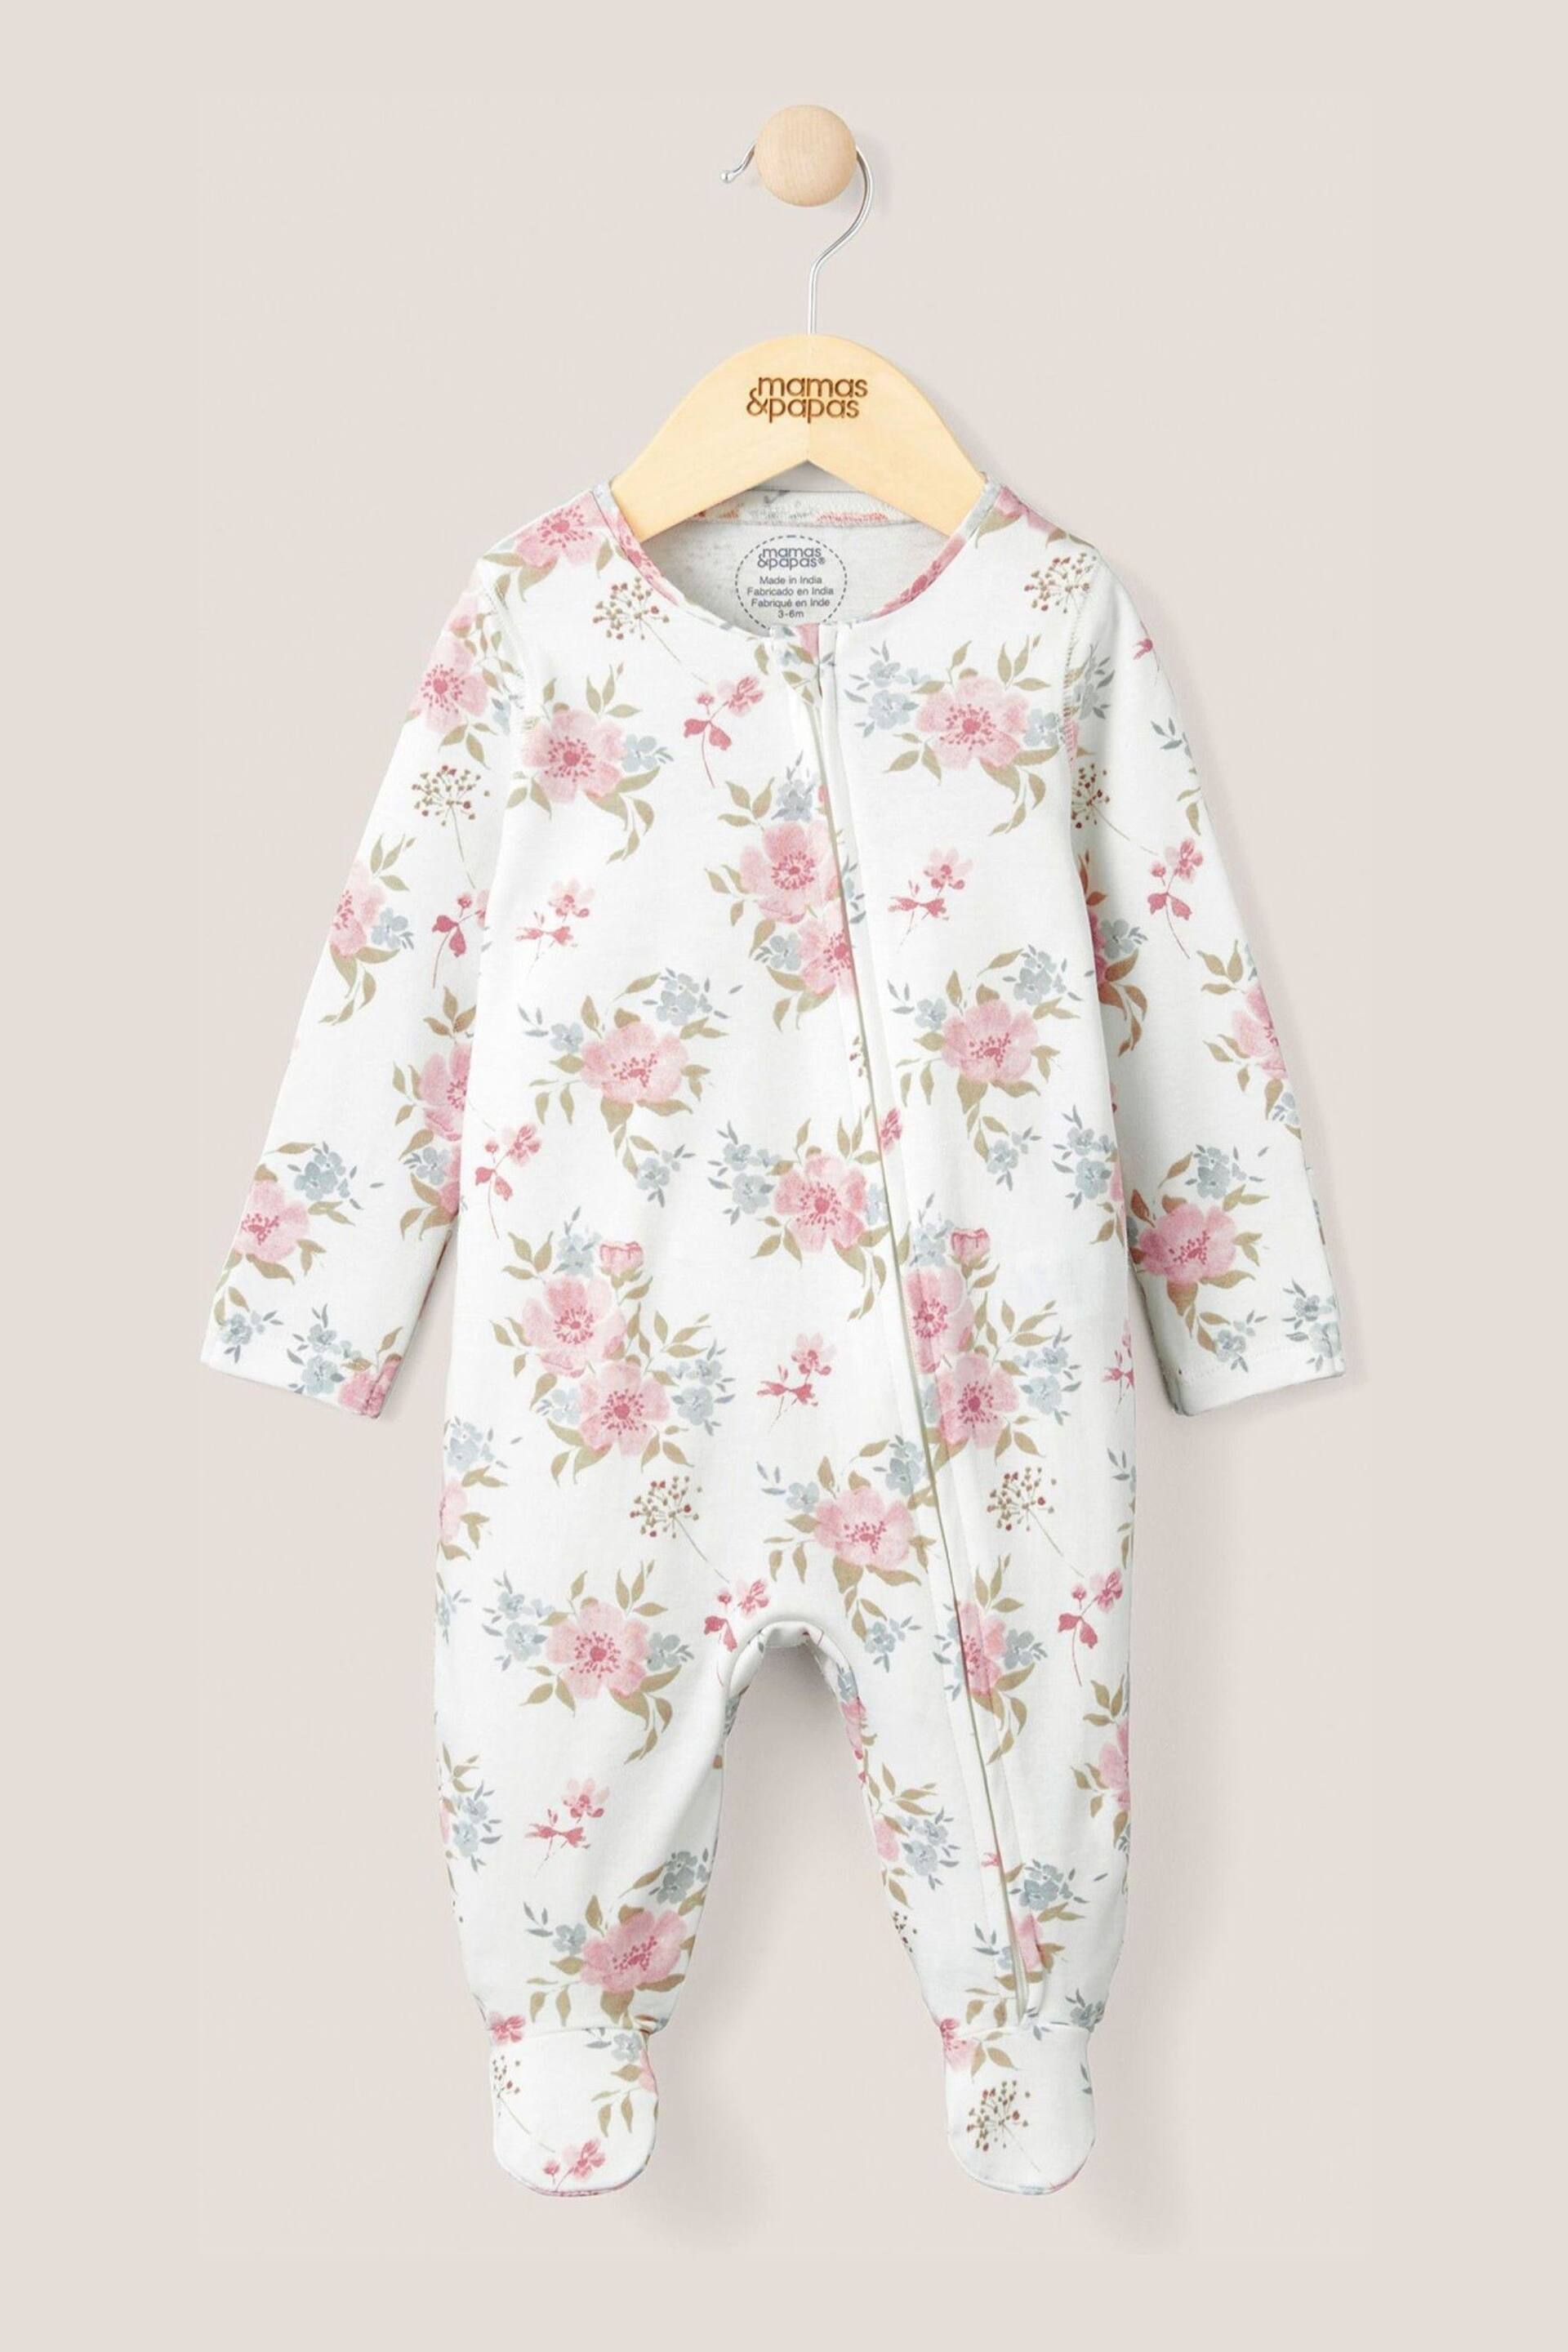 Mamas & Papas Pink Floral Print Sleepsuit - Image 1 of 3